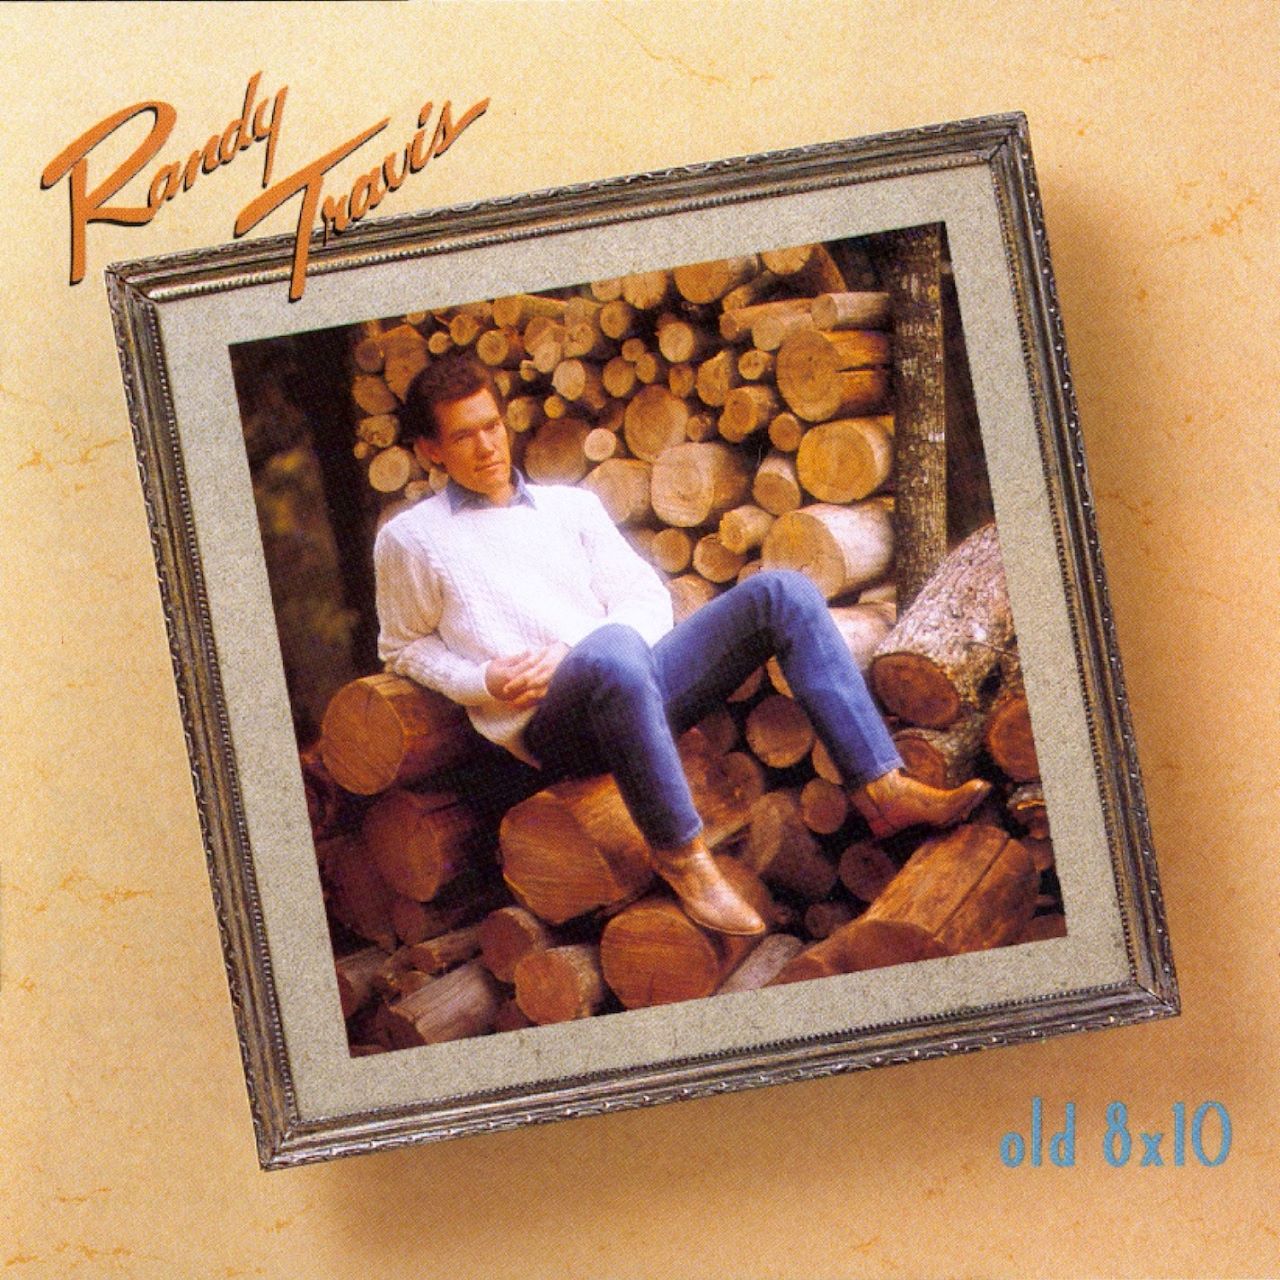 Randy Travis – Old 8×10 cover album